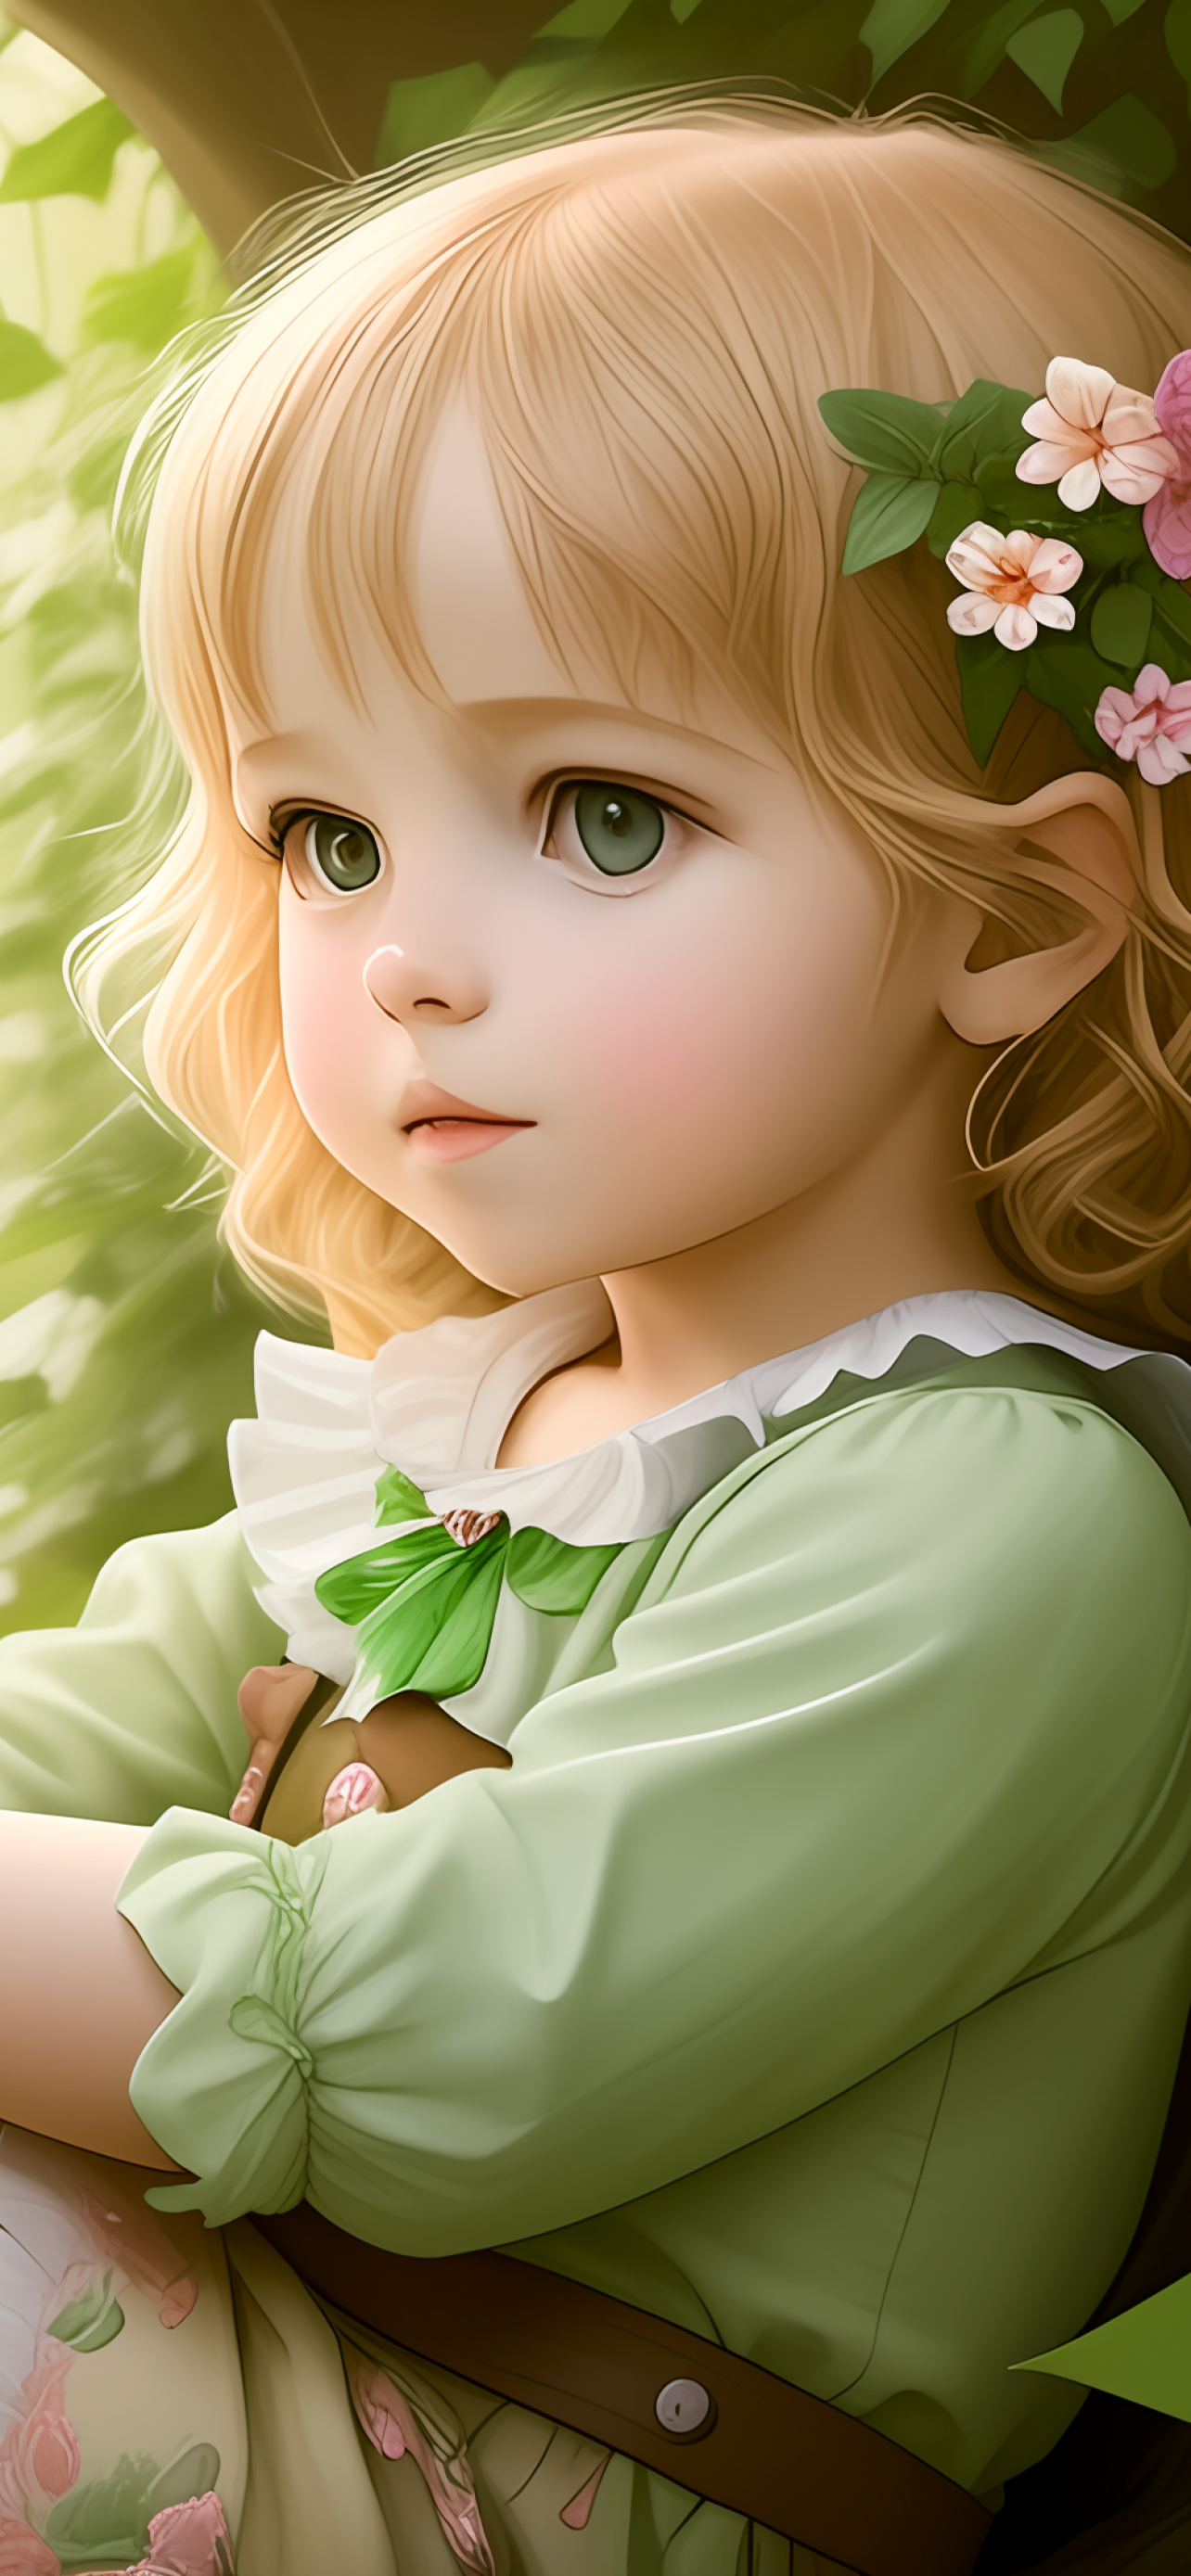 Cute Little Doll Girl Waiting Her Love HD Love Wallpaper